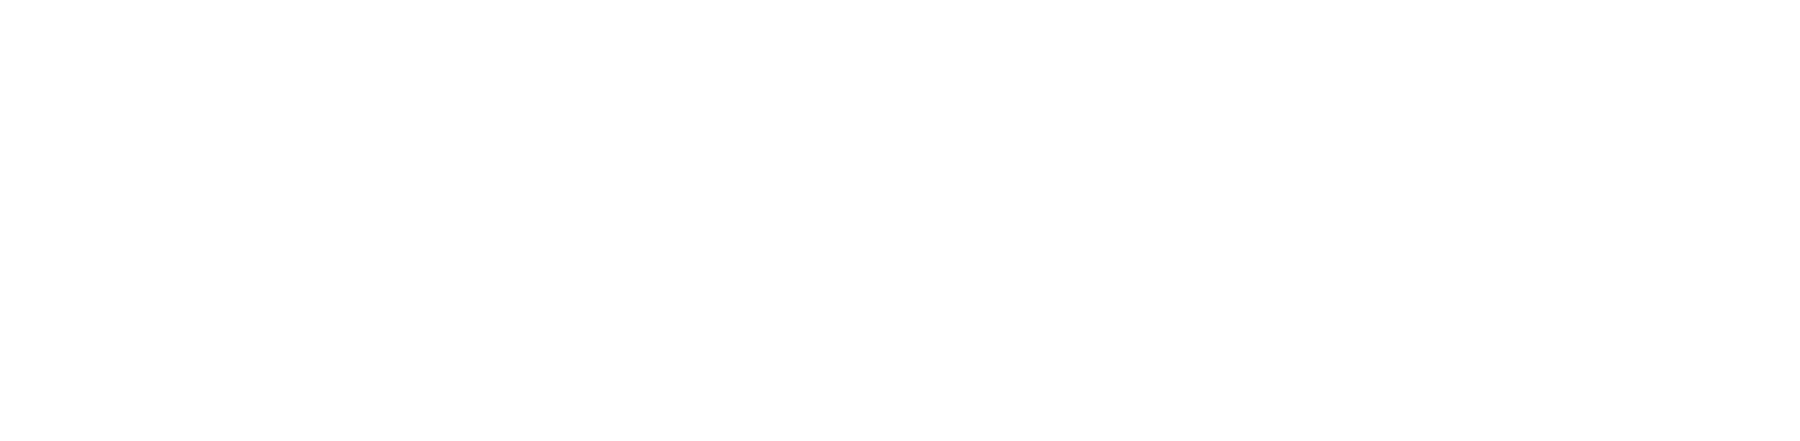 Westport Lofts in Belville, North Carolina logo